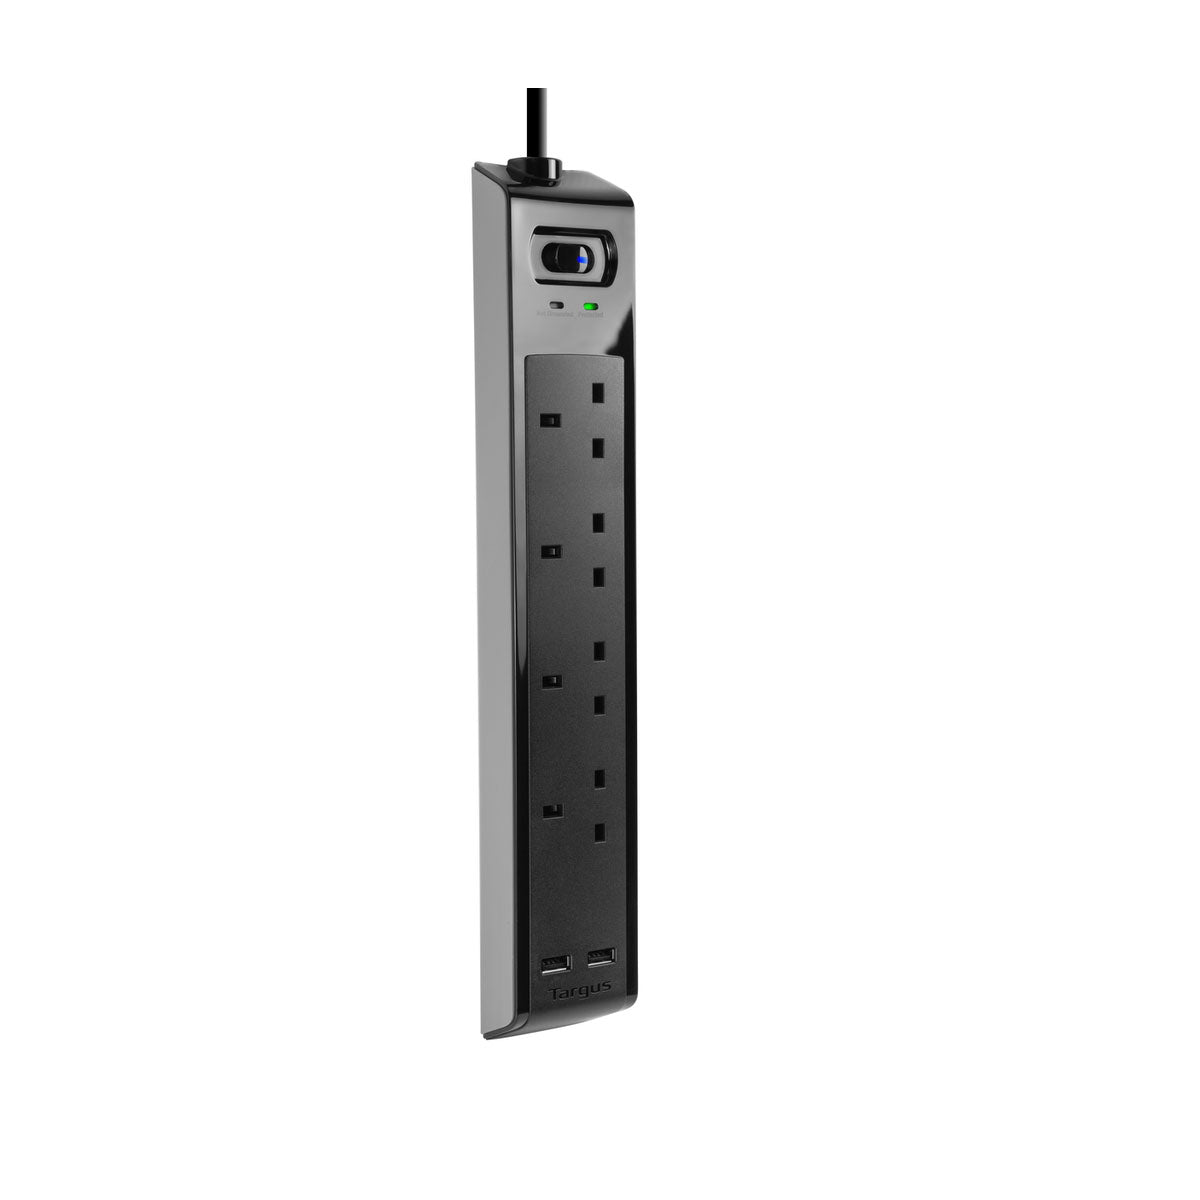 Targus APS10 Smart Surge 4 w/USB Port  2位防雷智能拖板